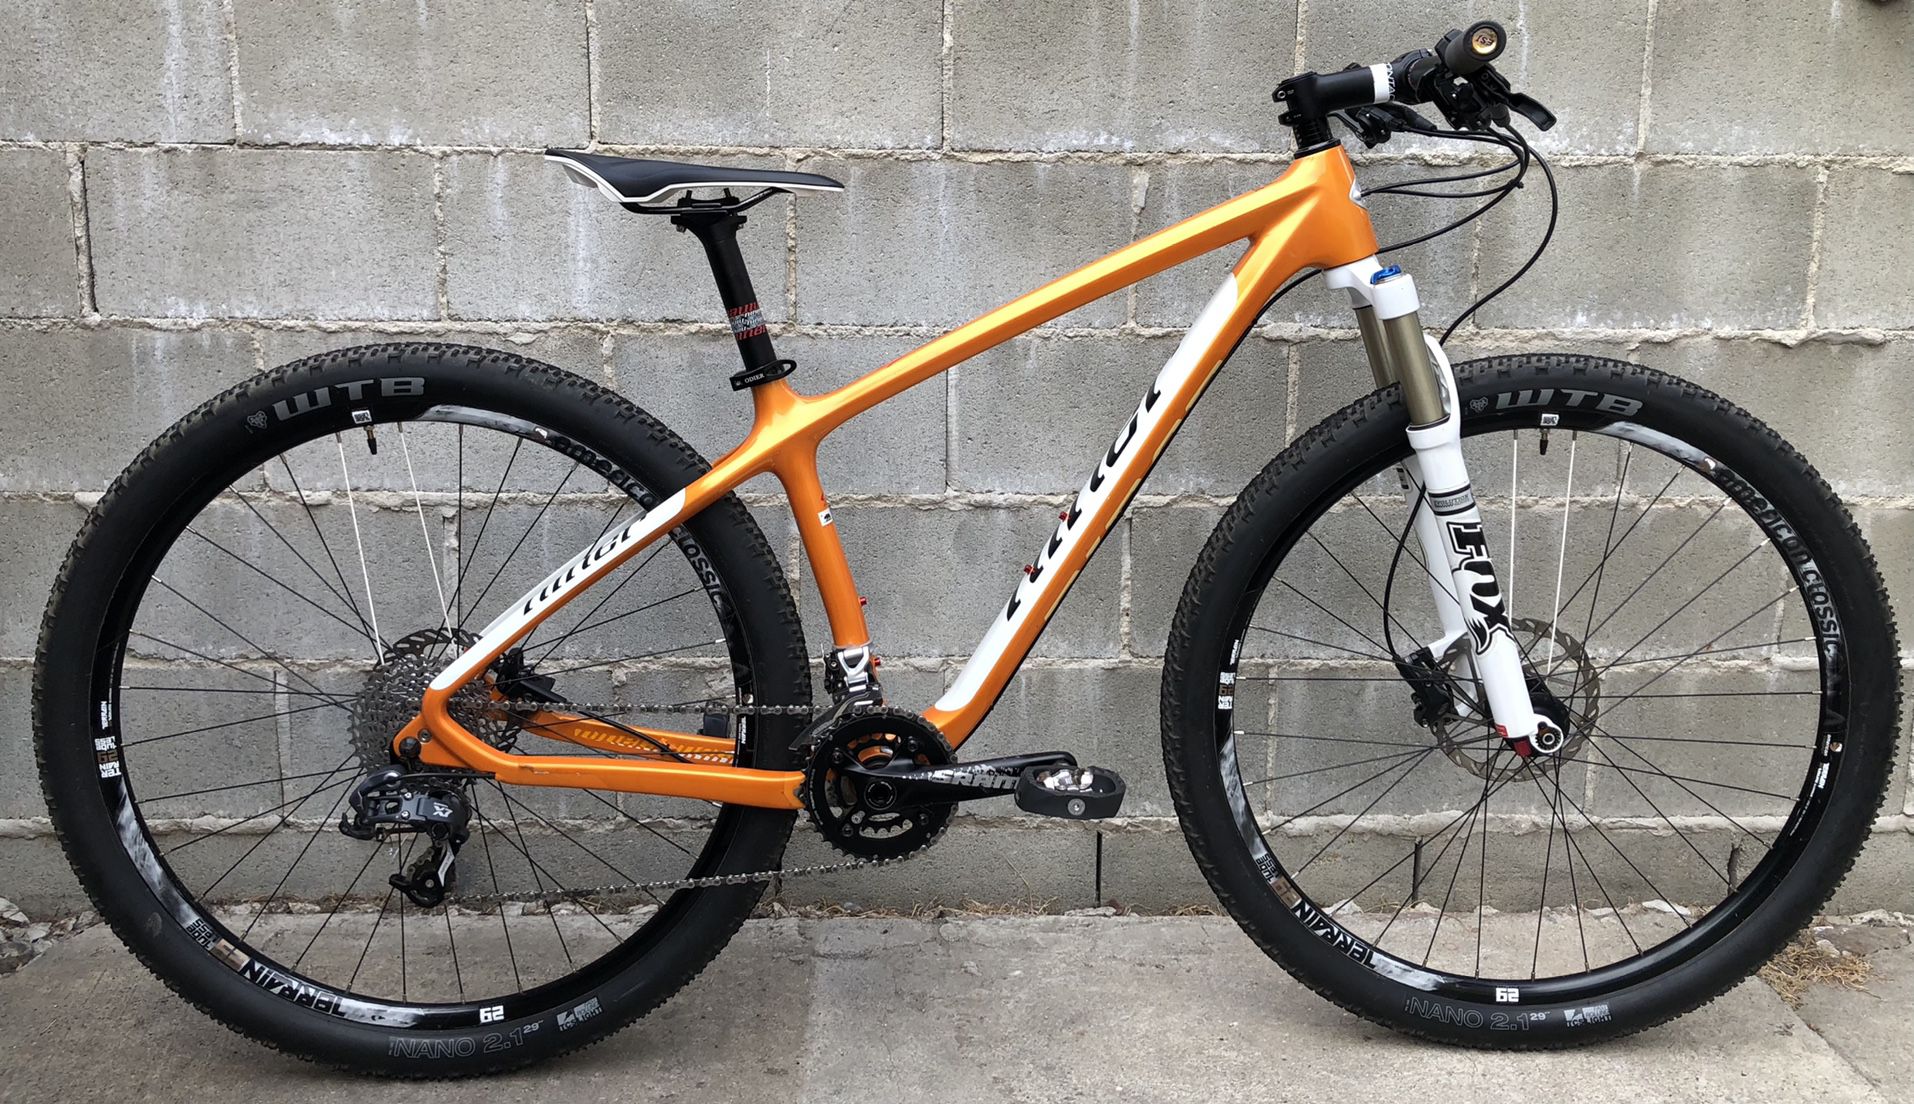 2014 Niner Air 9 carbon mountain bike 29er lightweight bicycle